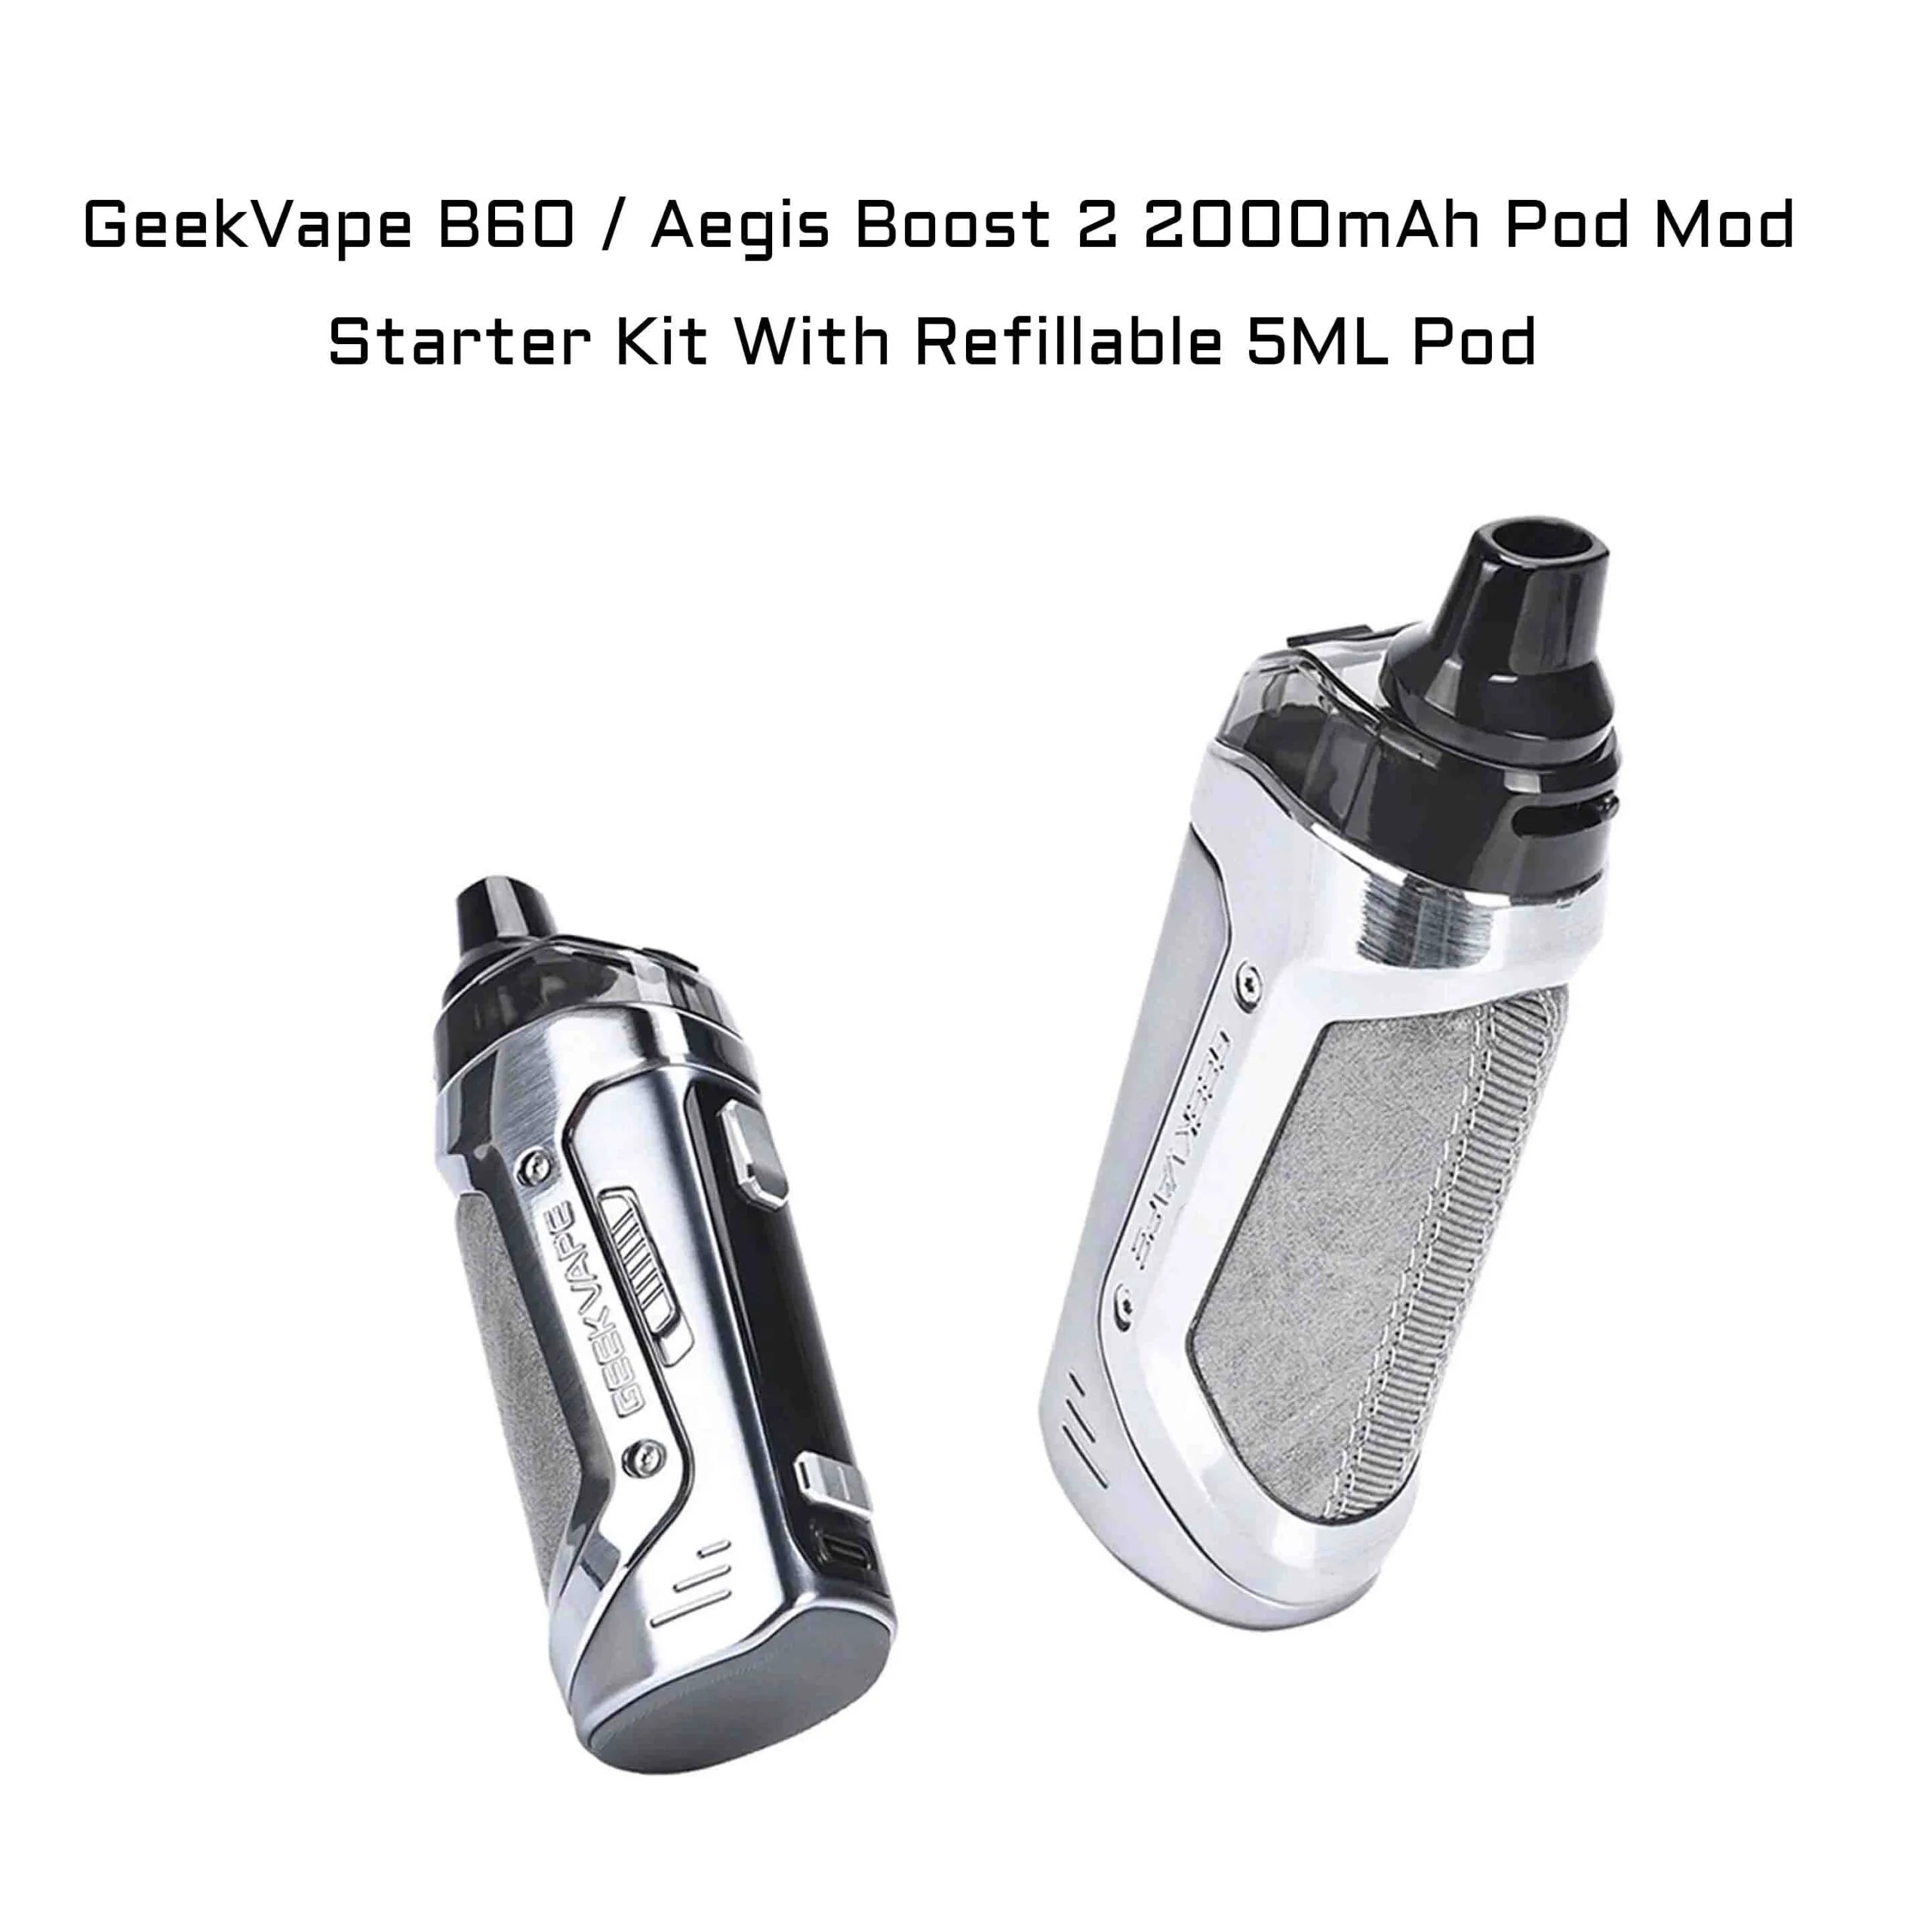 GeekVape B60 / Aegis Boost 2 2000mAh Pod Mod Starter Kit With Refillable 5ML Pod